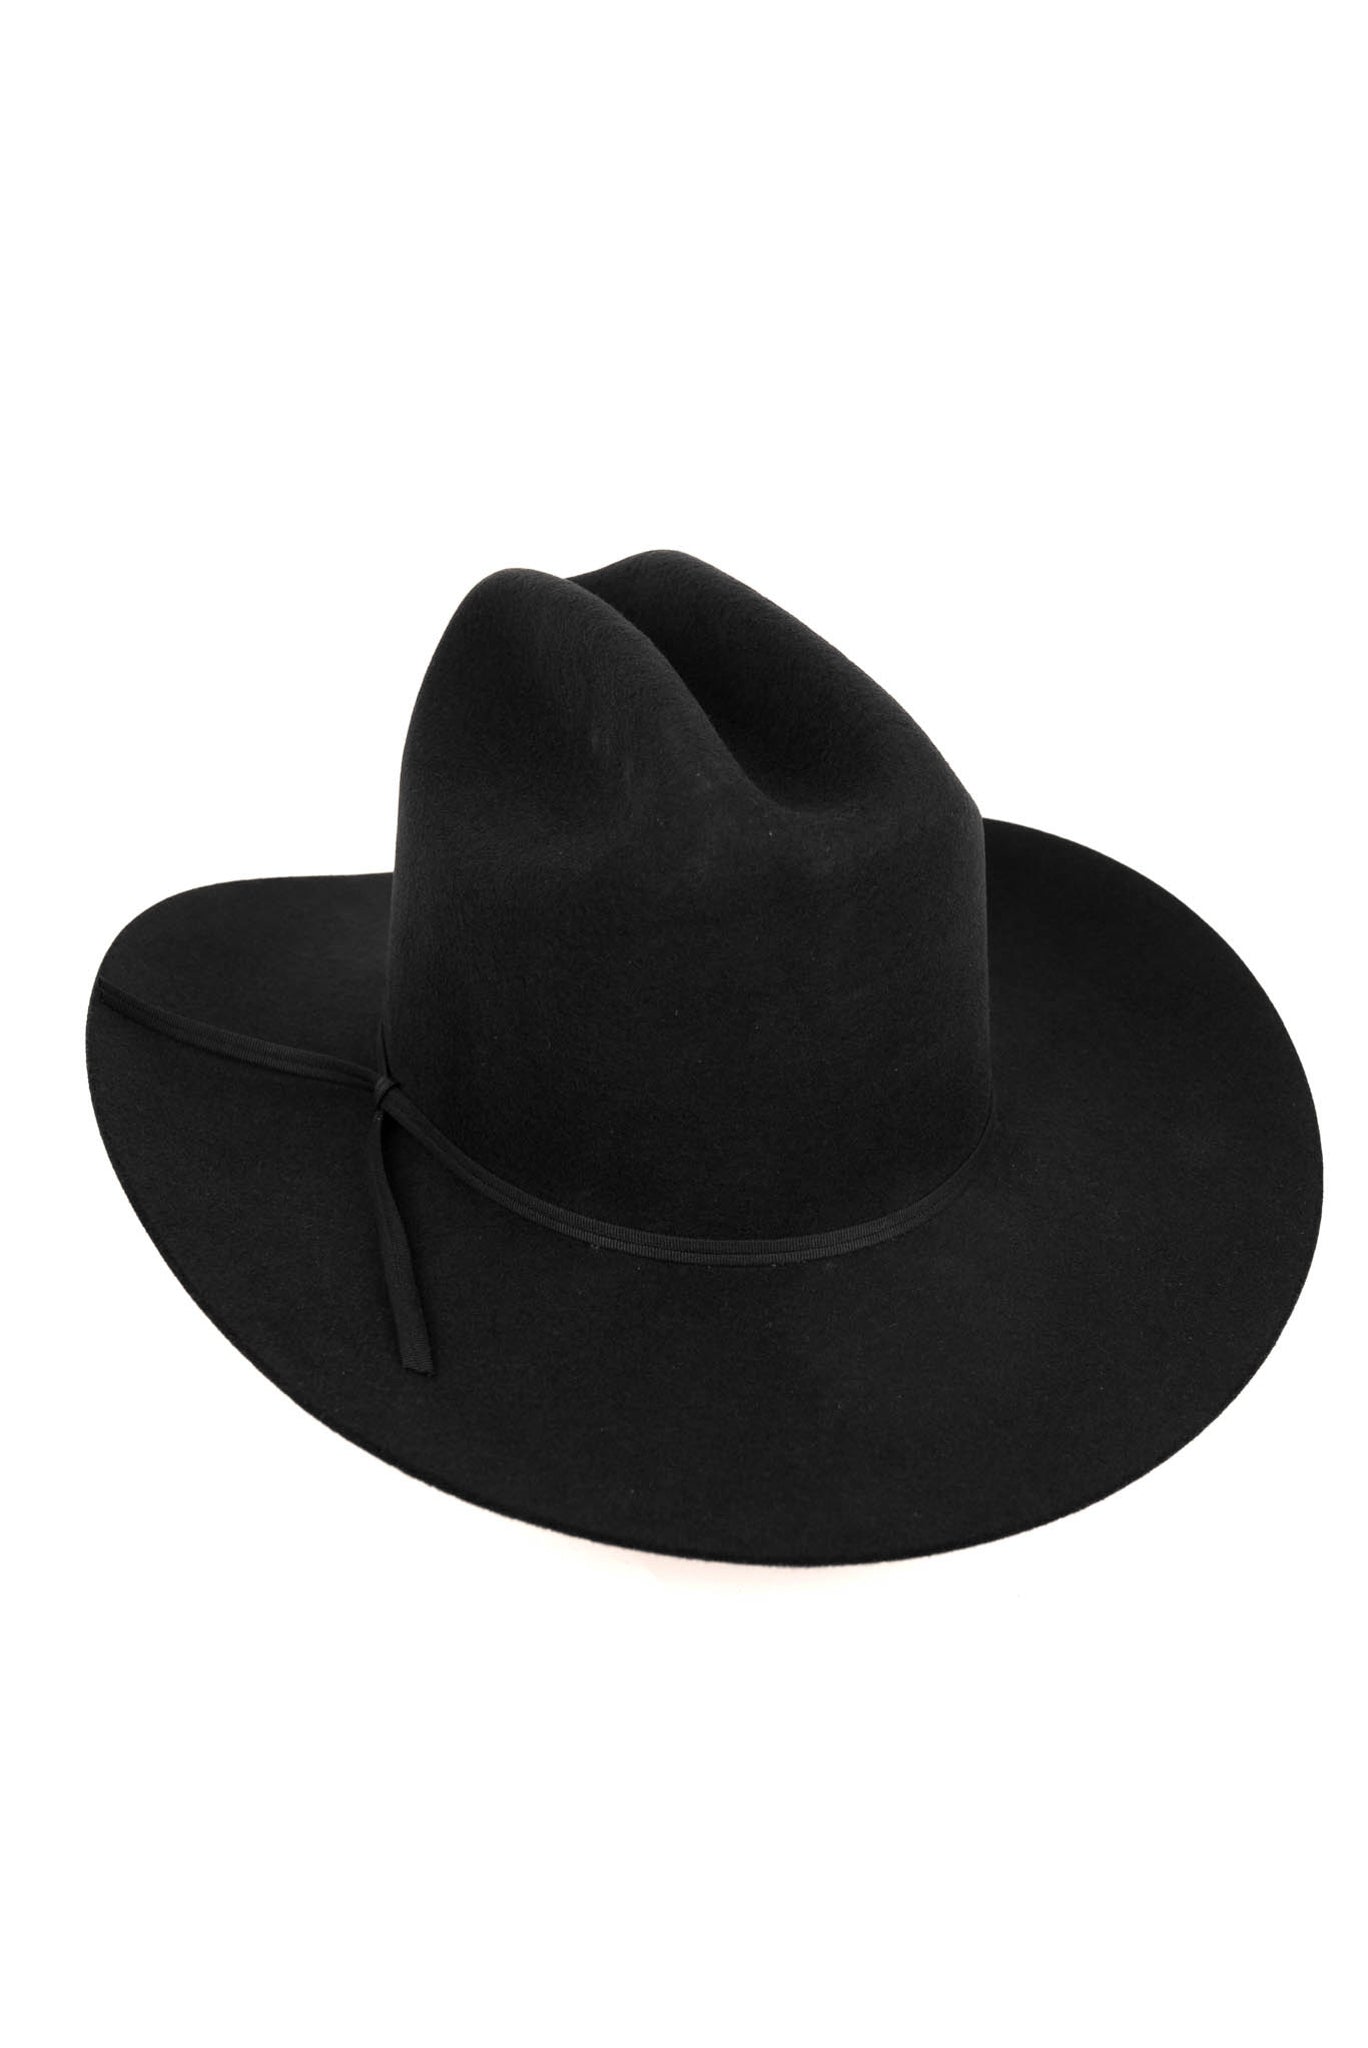 Sinaloa 6X Felt Hat